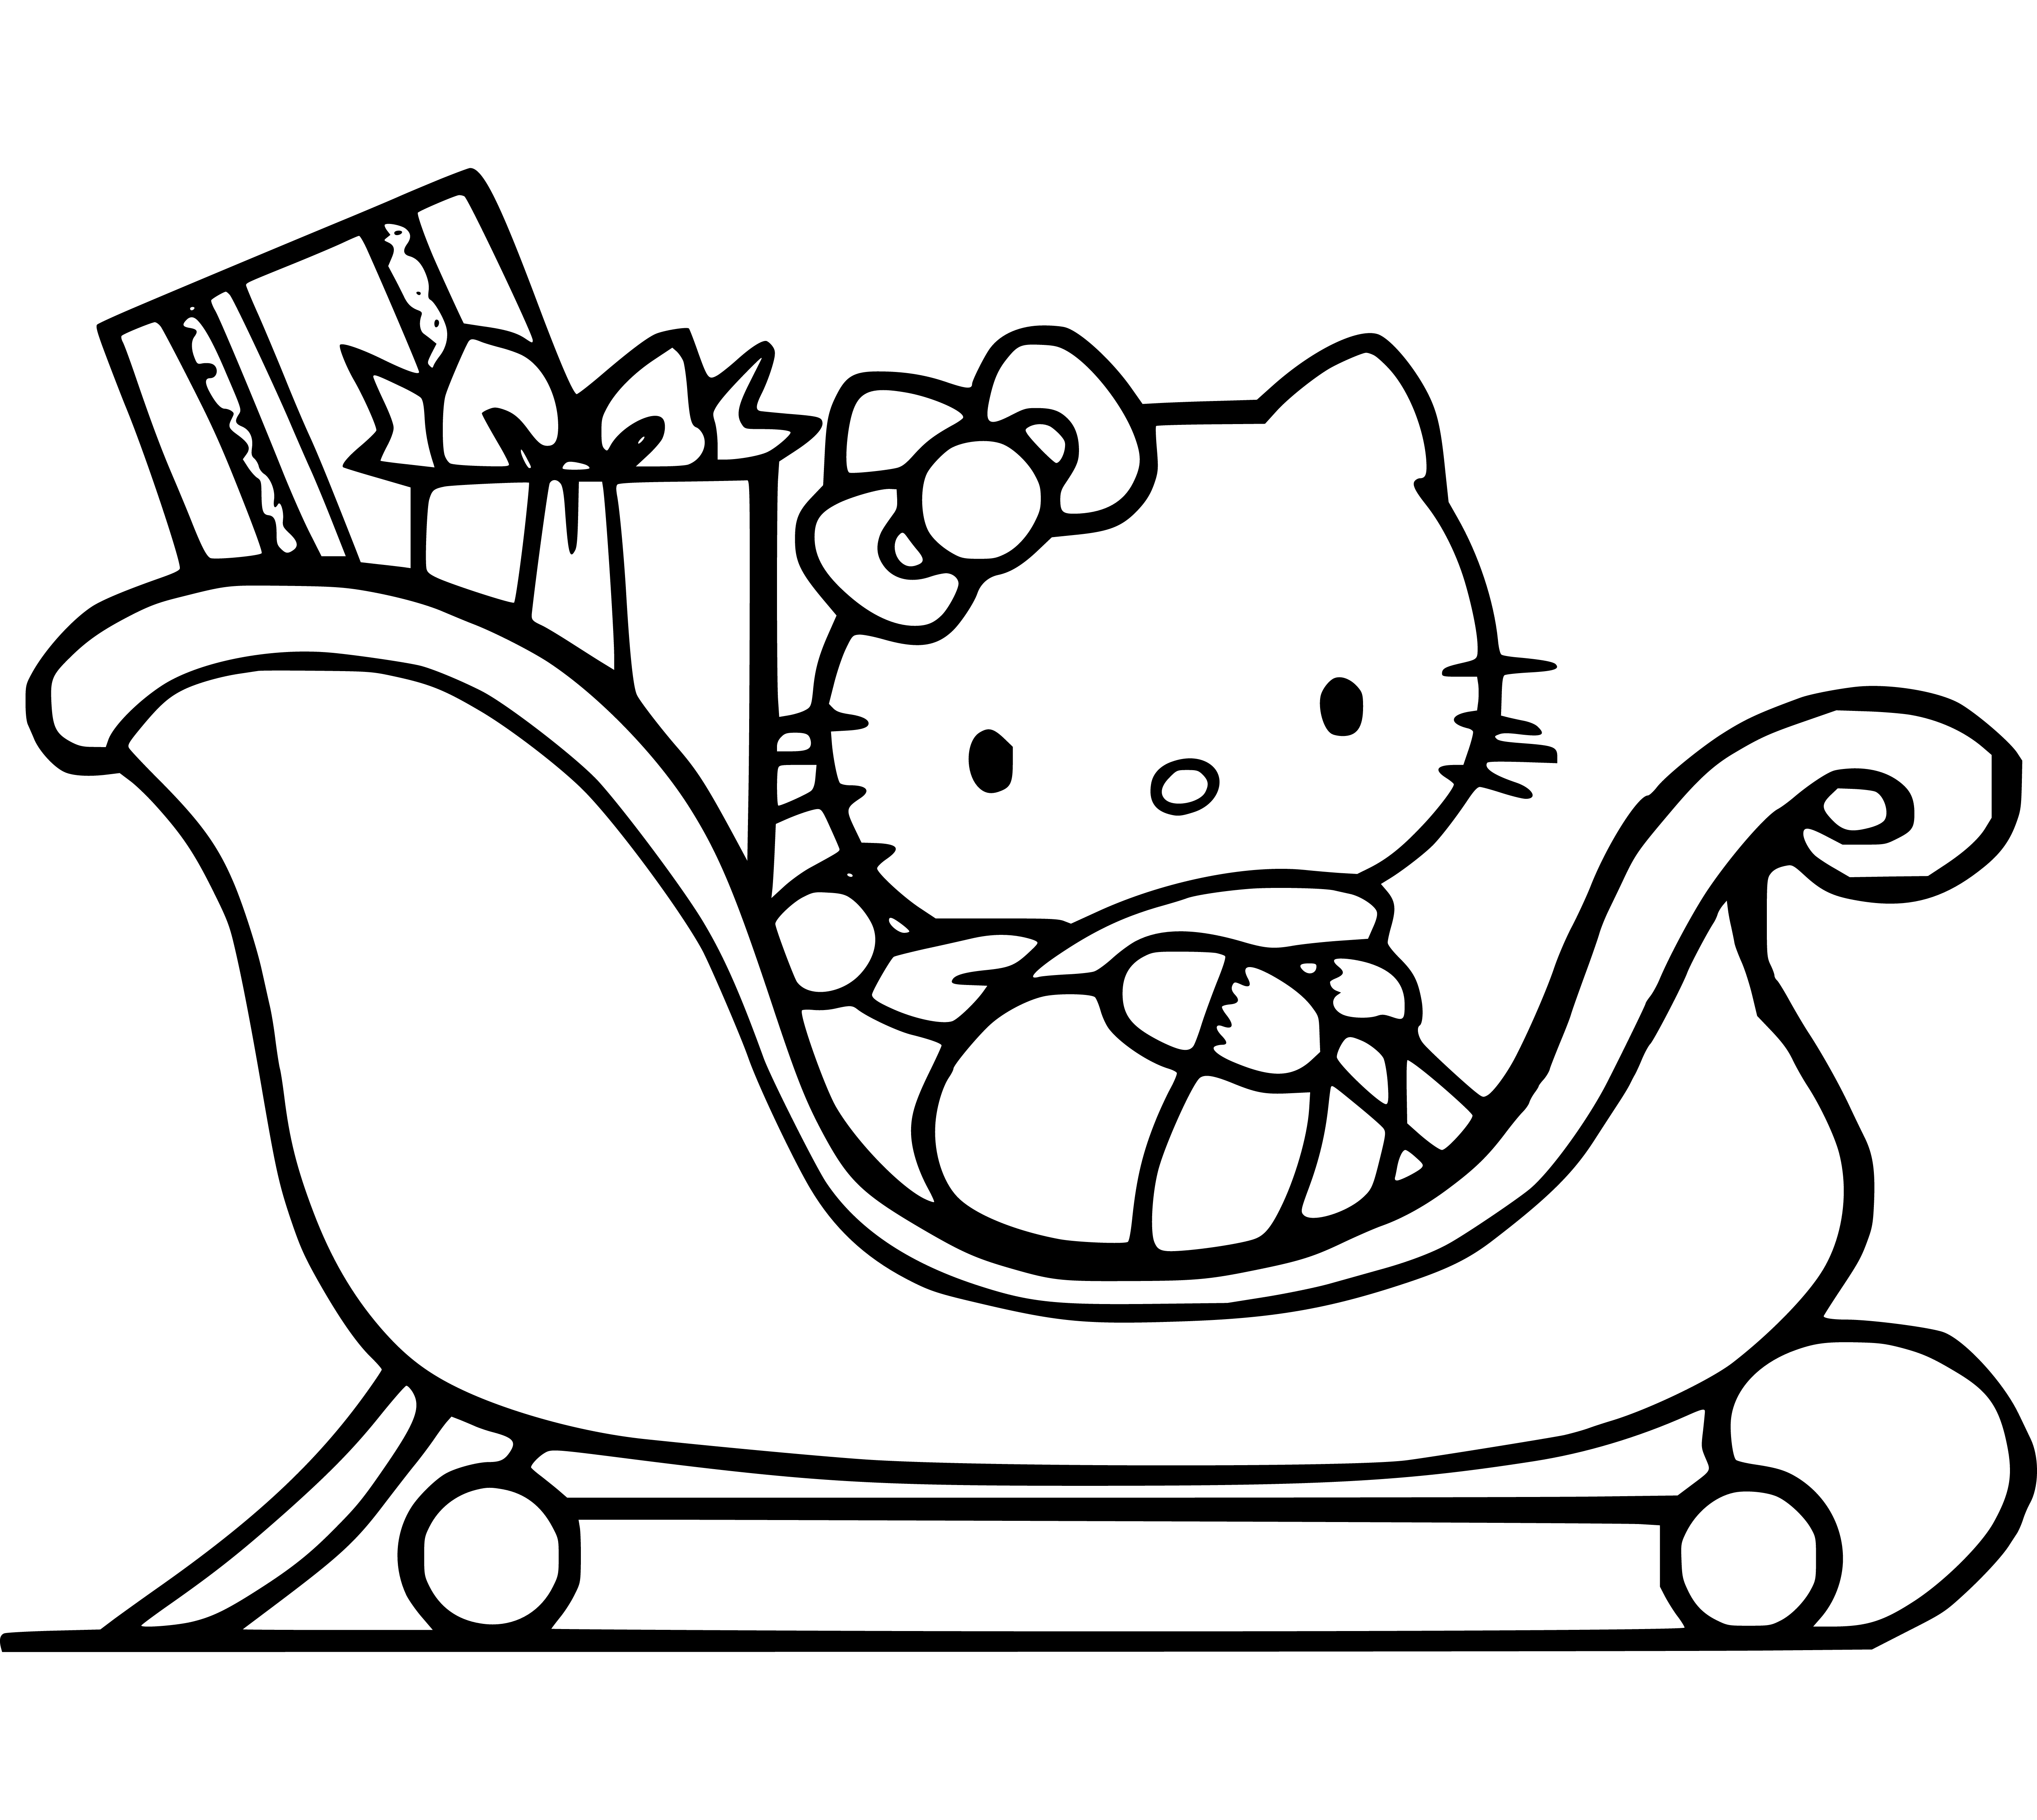 Printable Hello Santa Kitty Coloring Page for kids.